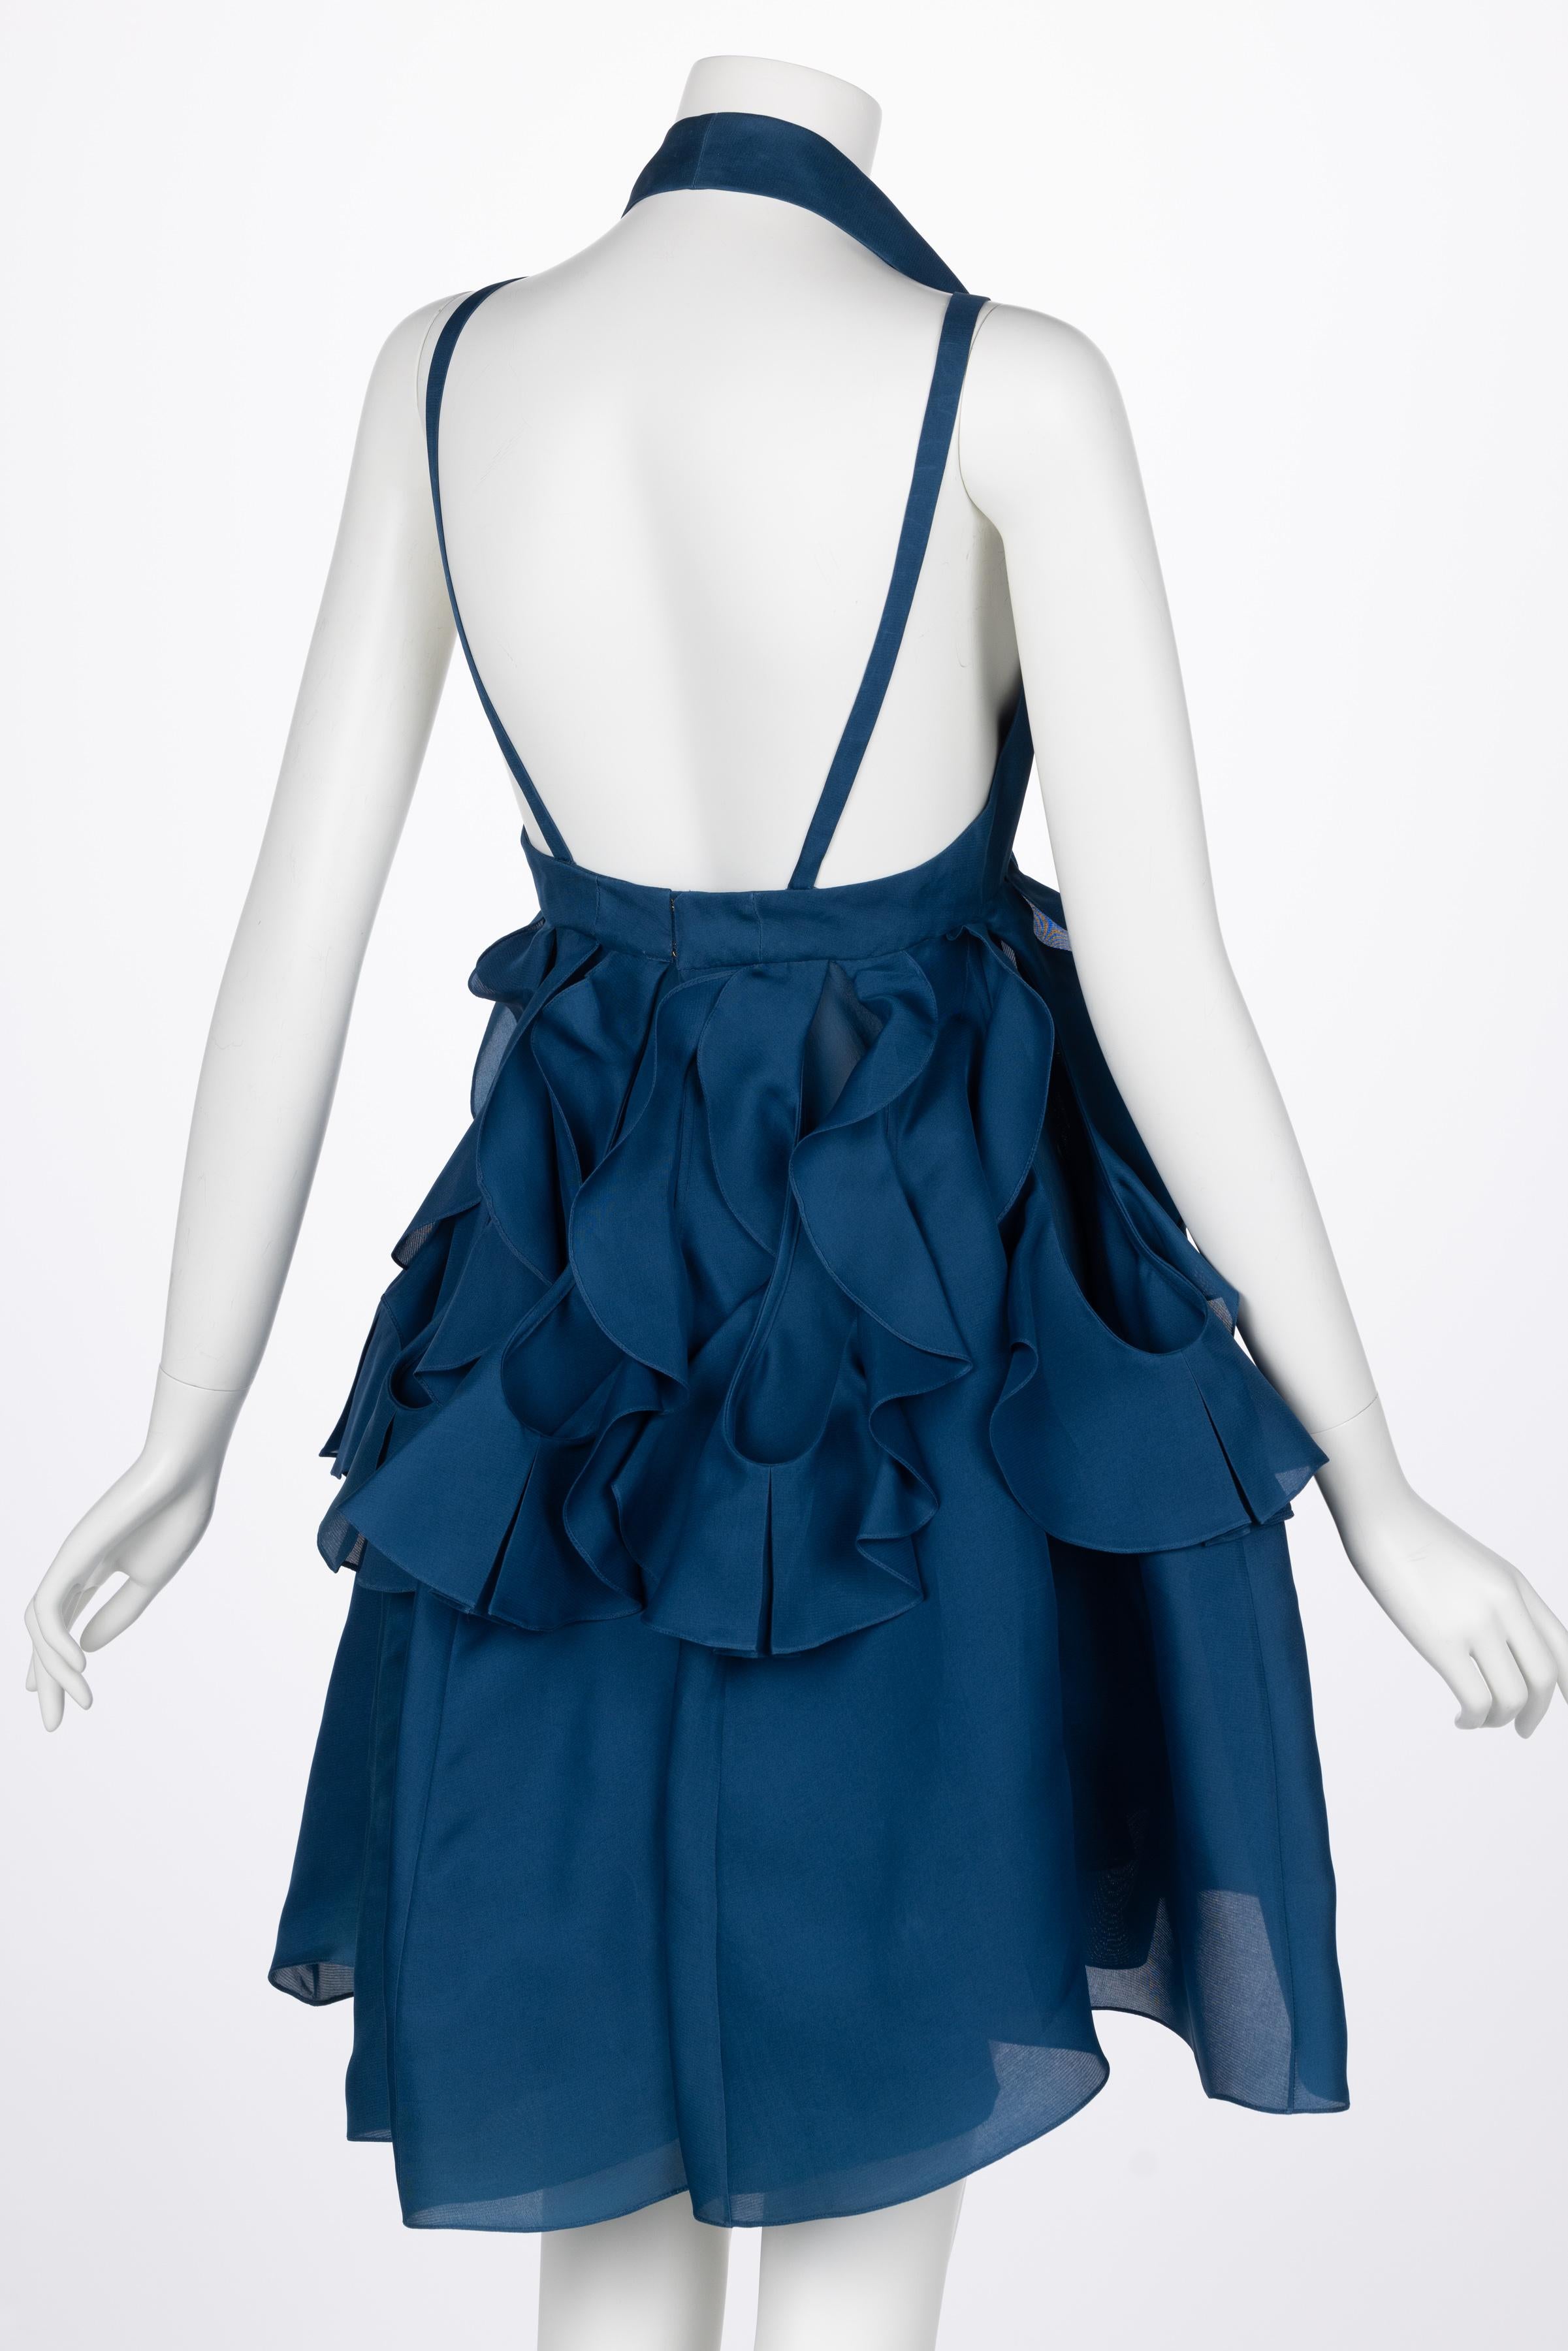 Yves Saint Laurent Blue Silk Organza Spring 2012 Runway Dress For Sale 1